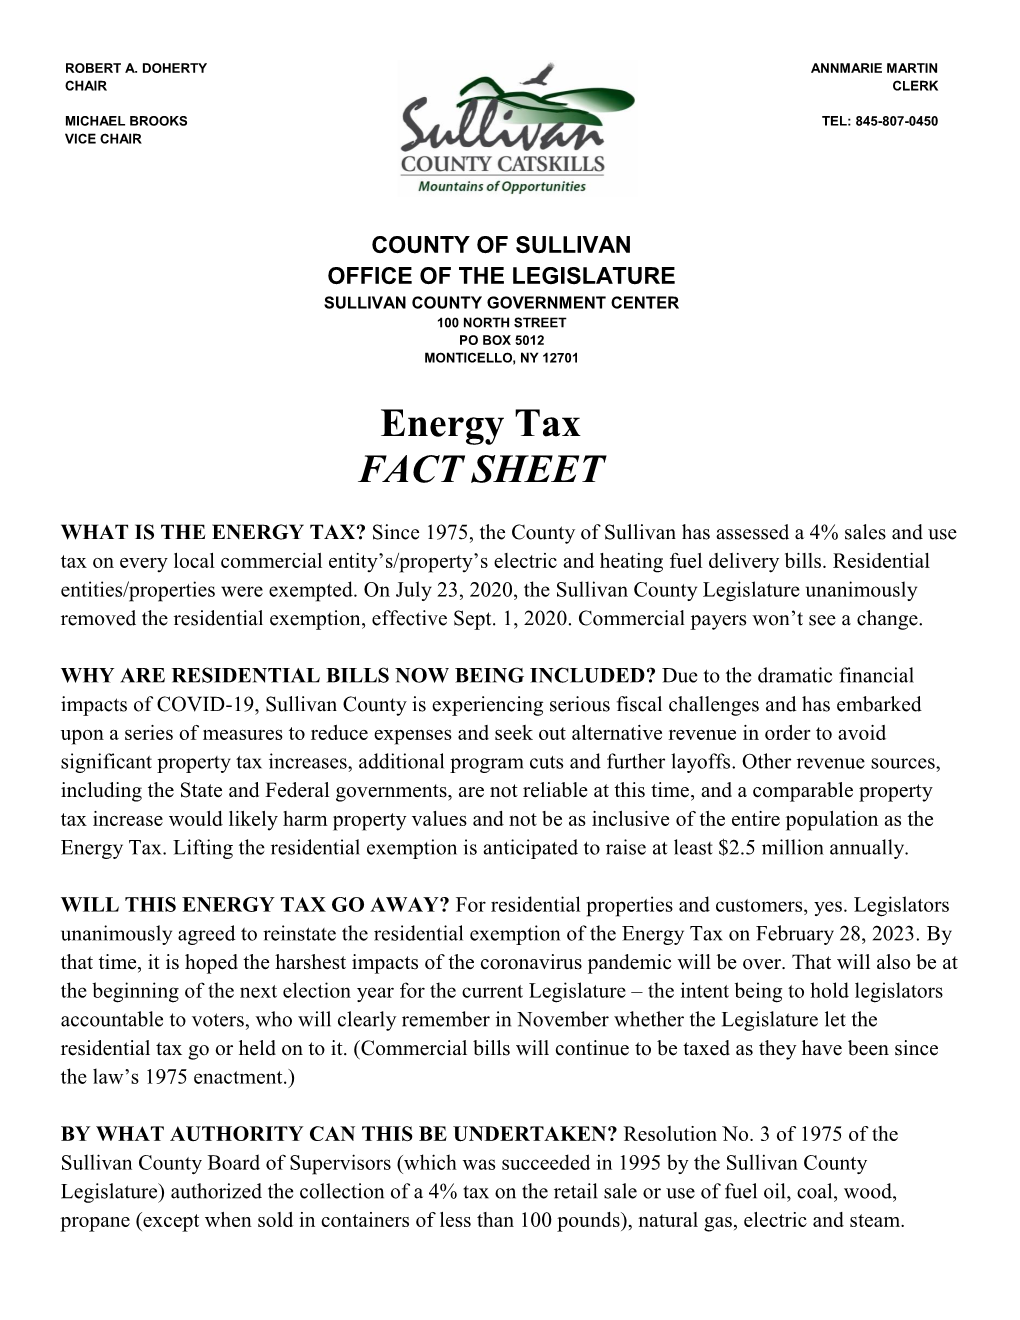 4% Energy Tax Fact Sheet